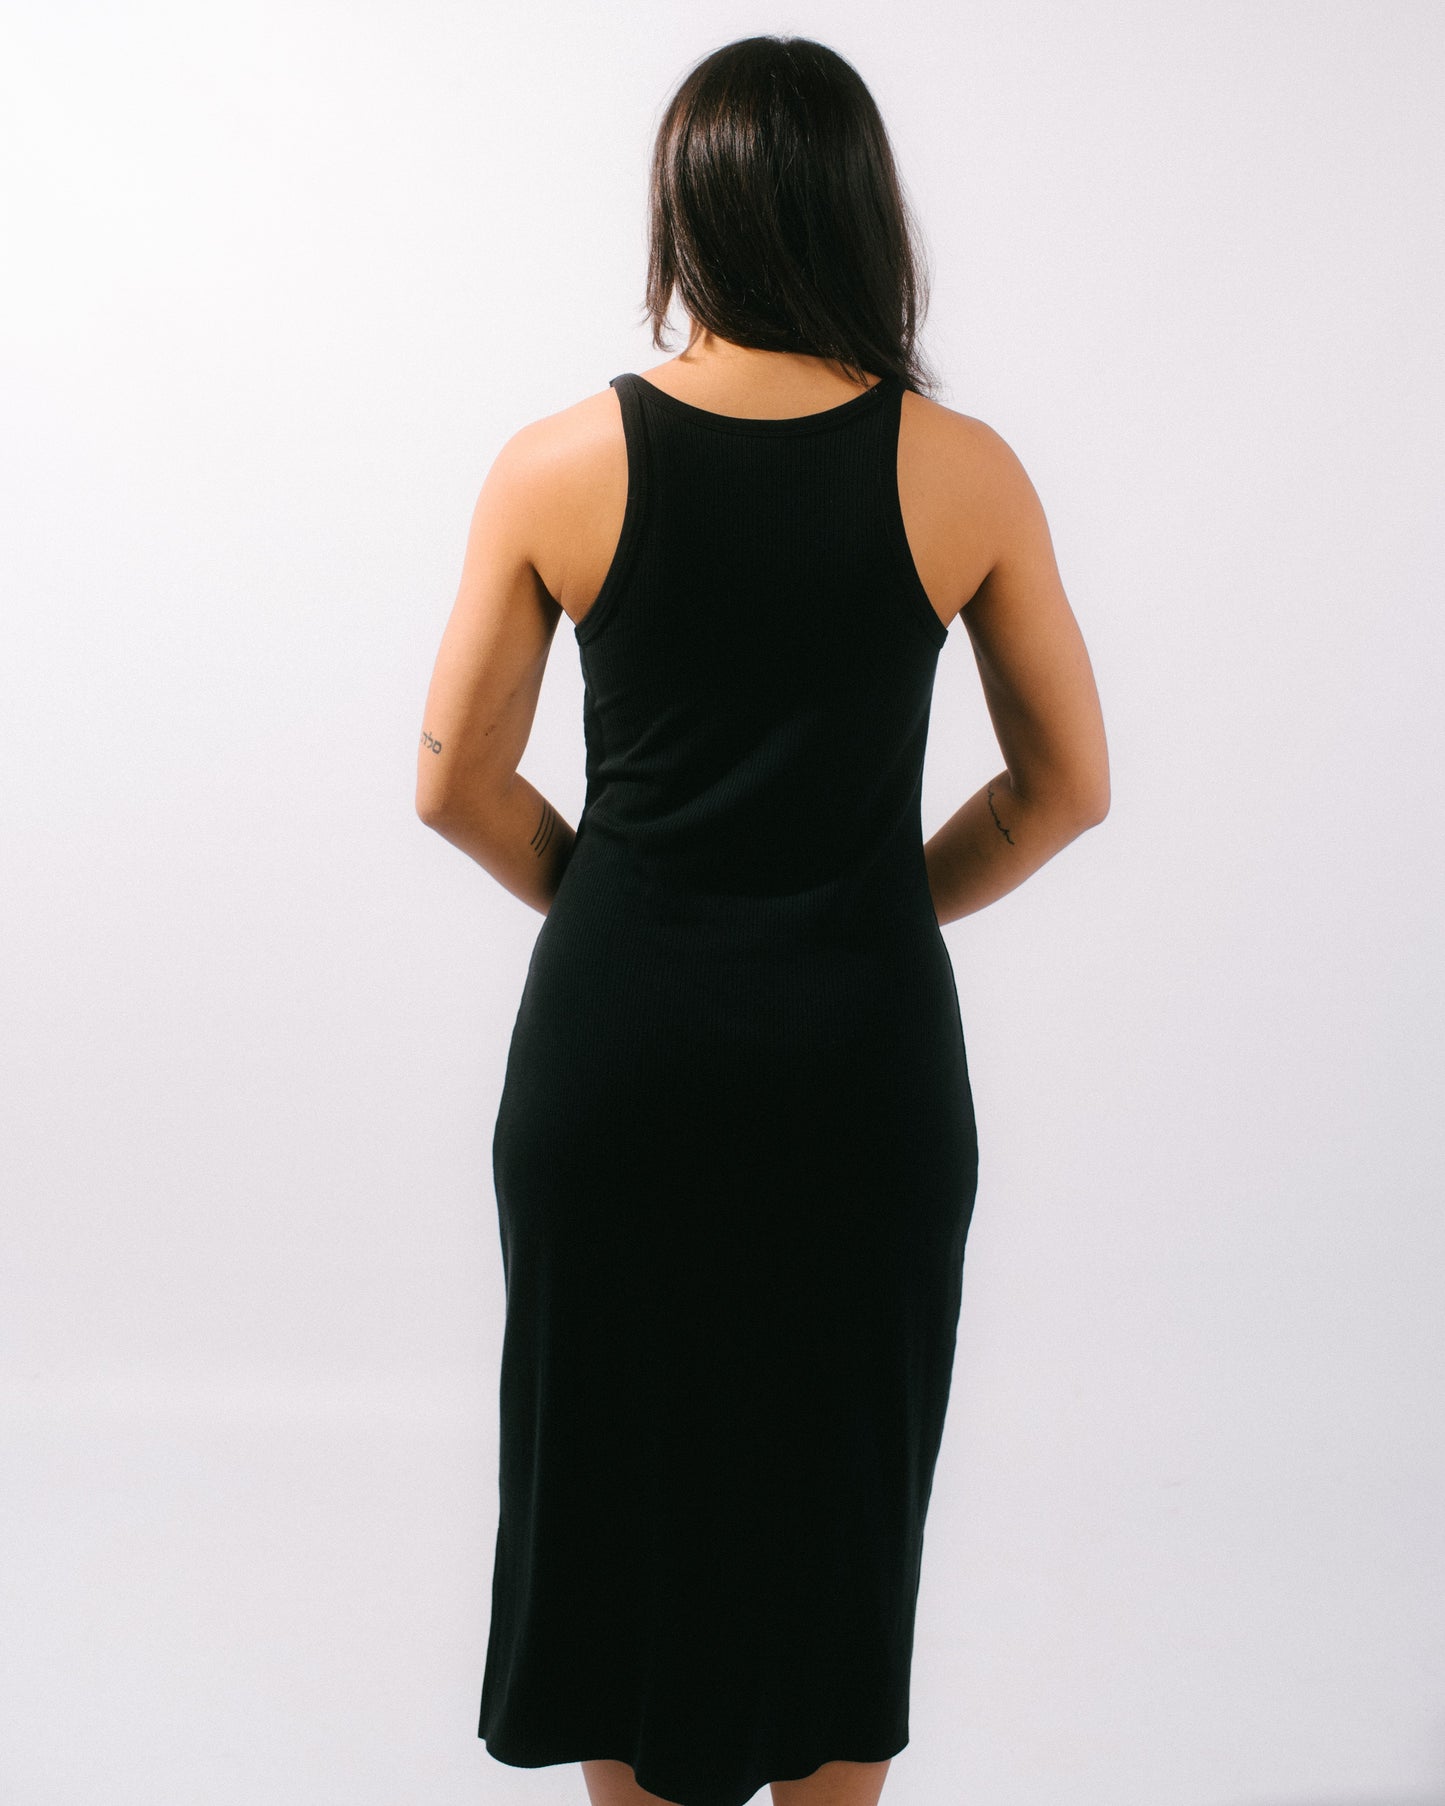 vintage ribbed midi dress in black on back of model